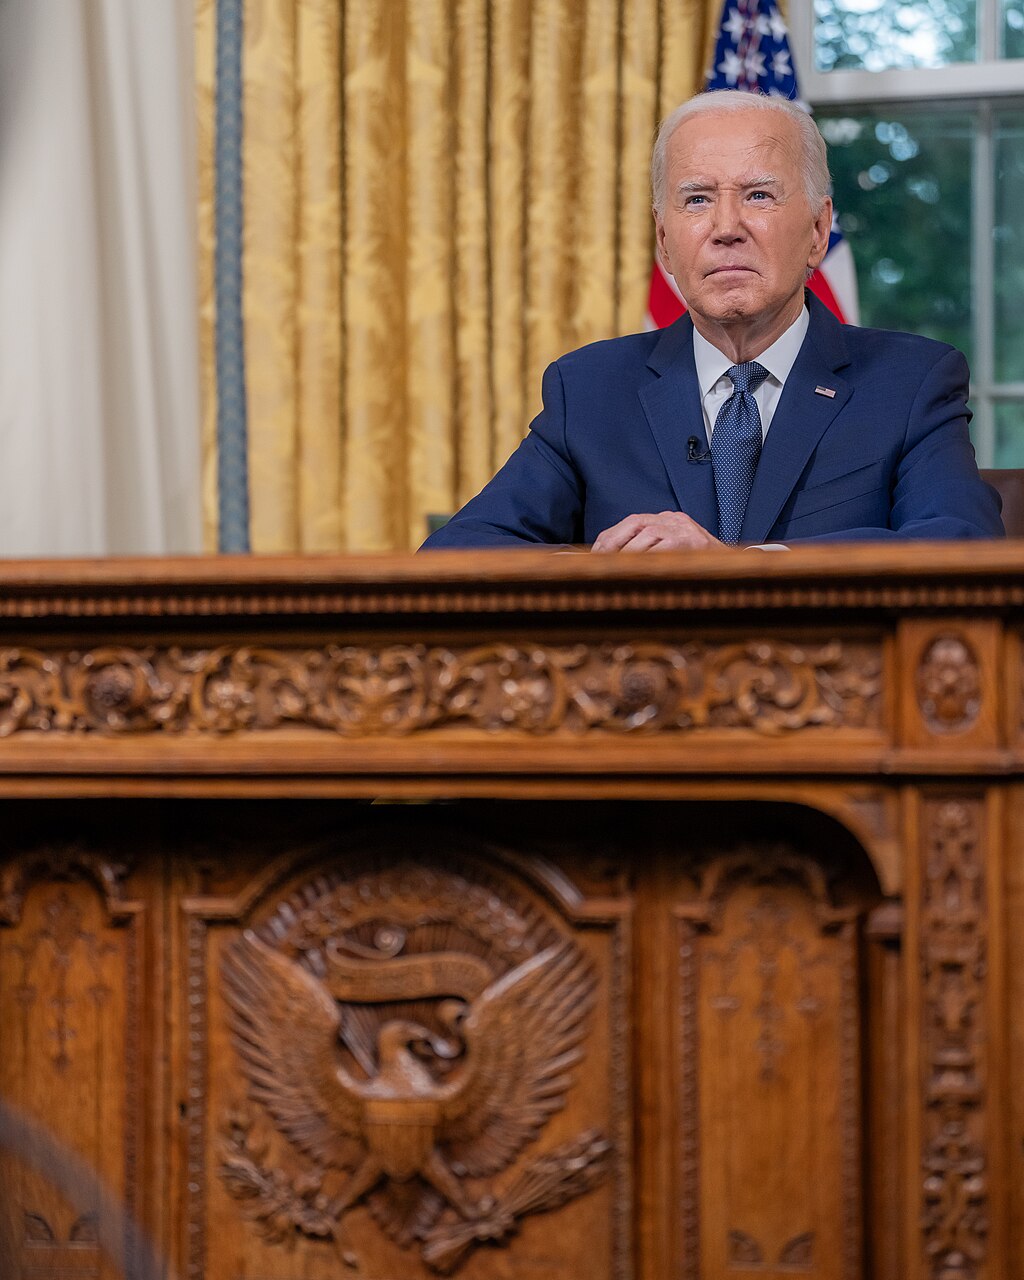 President Biden announces review on security measures following Trump assassination attempt